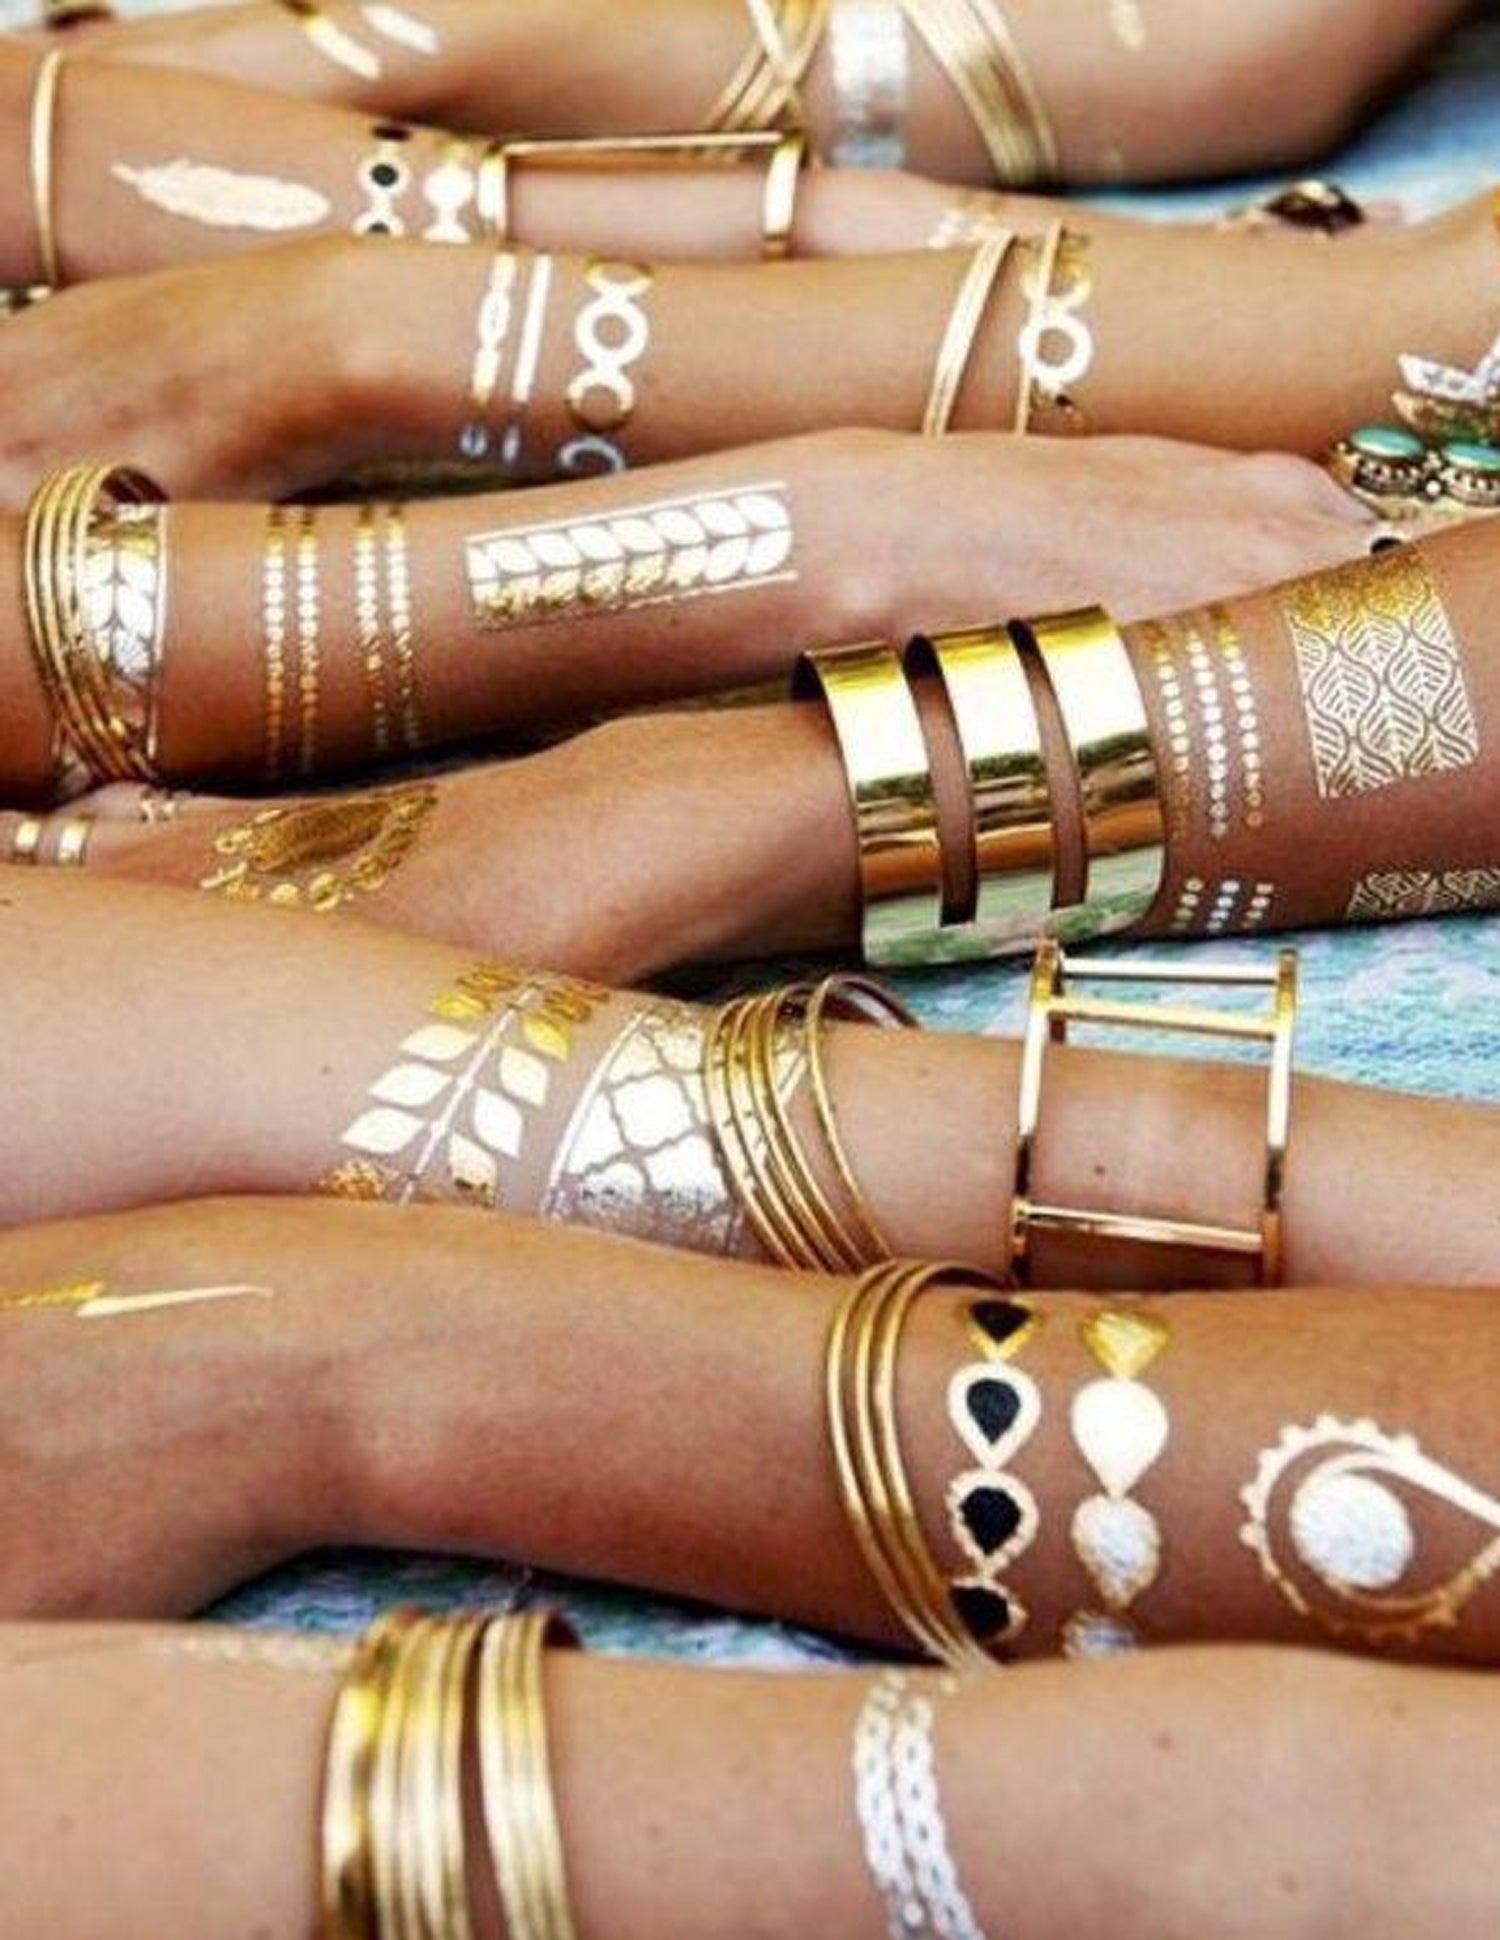 Small Arrow Tattoo Ideas for Women - Tribal Minimal Simple Bracelet Tatts - MyBodiArt.com